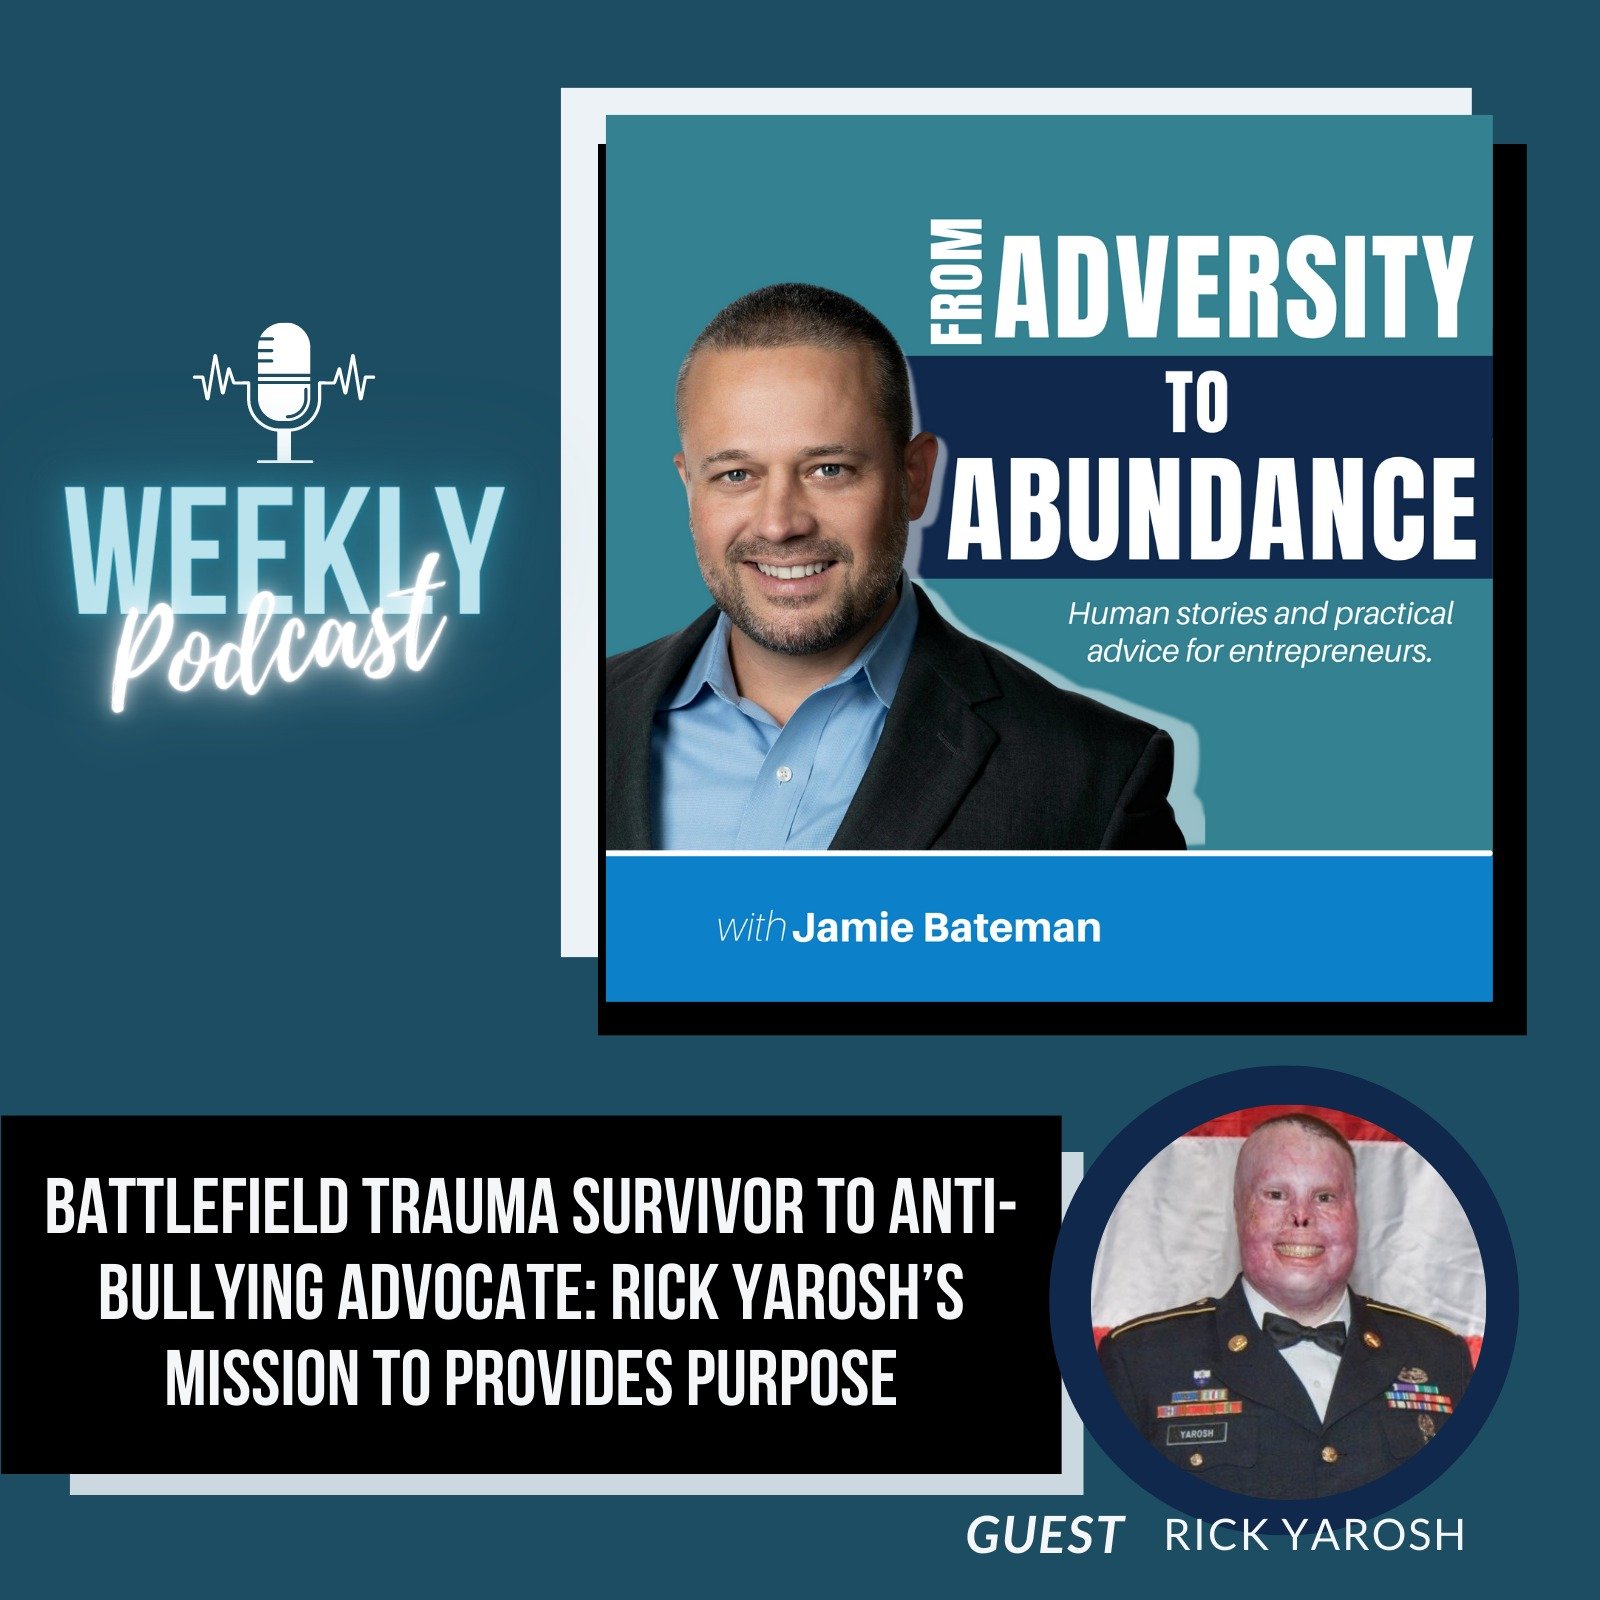 Battlefield Trauma Survivor to Anti-Bullying Advocate: Rick Yarosh’s Mission to Provide Purpose